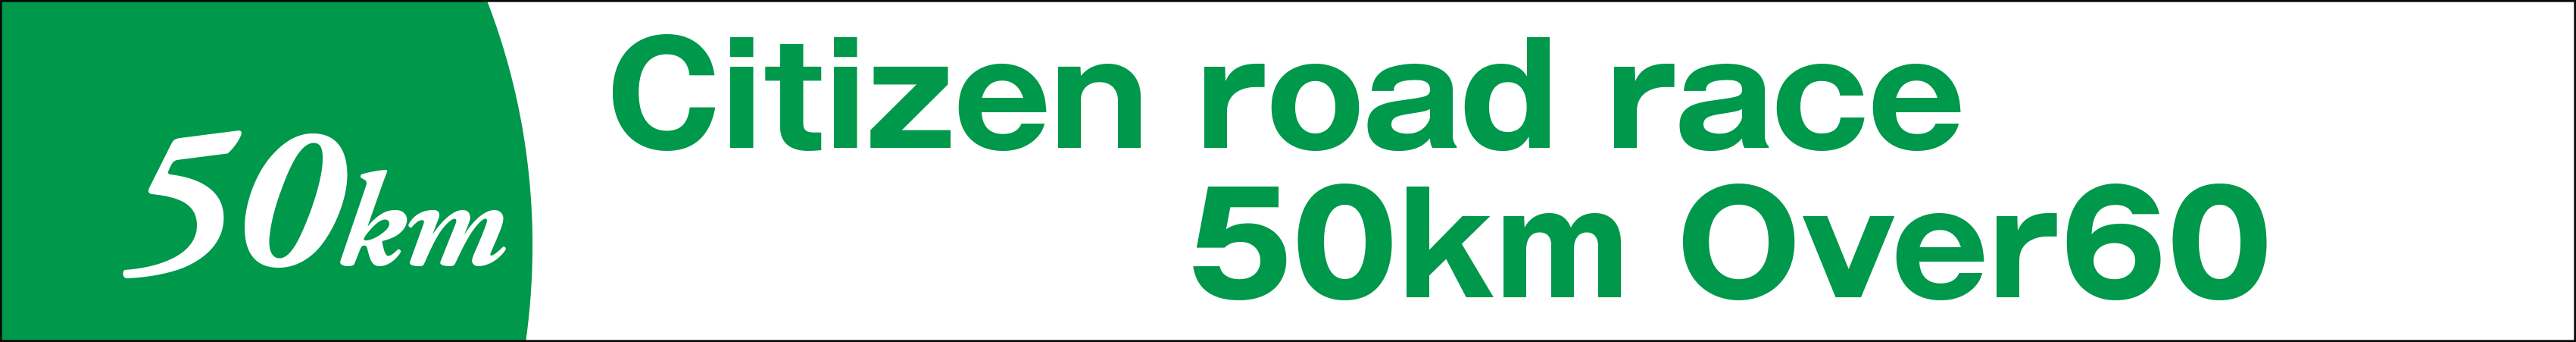 Citizen Road Race 50km over 60